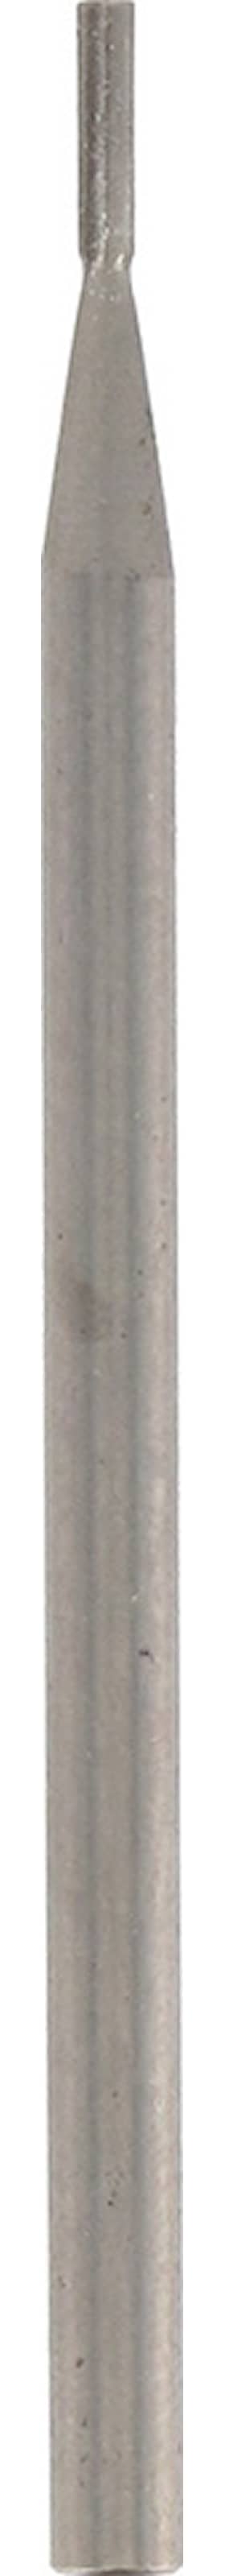 Dremel graverestift 111JA 0,8 mm. 3 stk. pak Graverstift